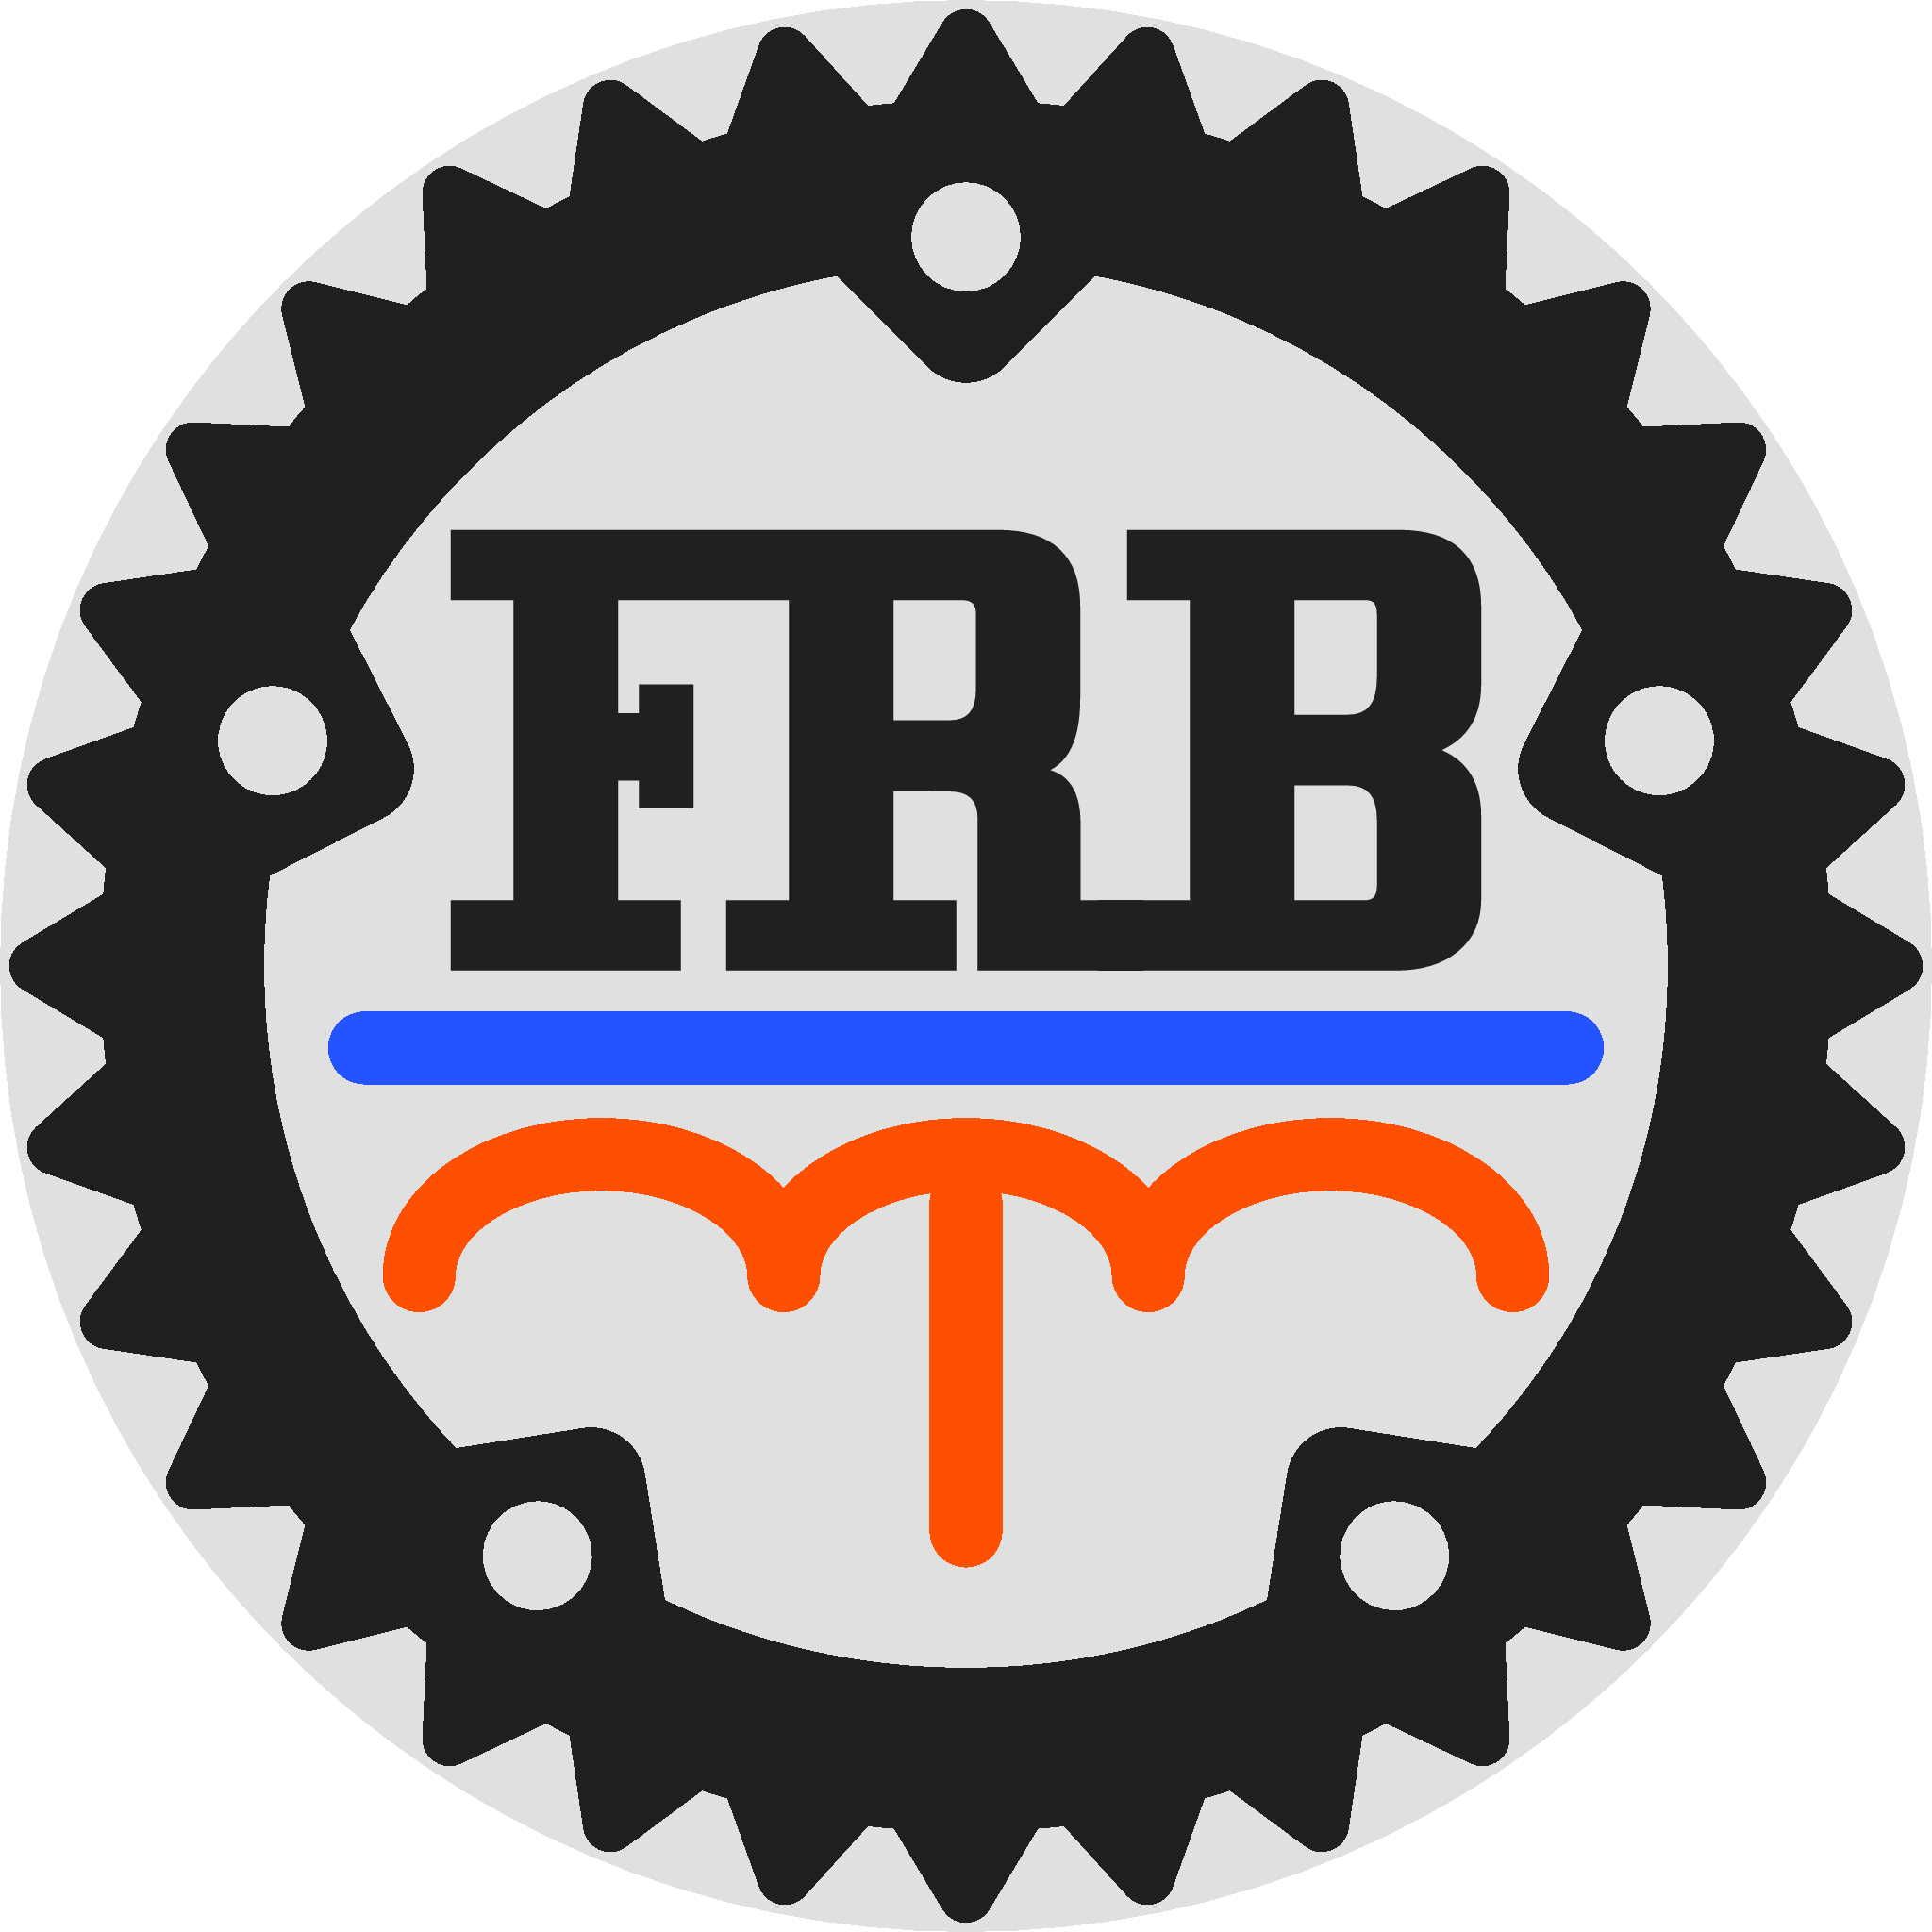 the Ferrilab logo